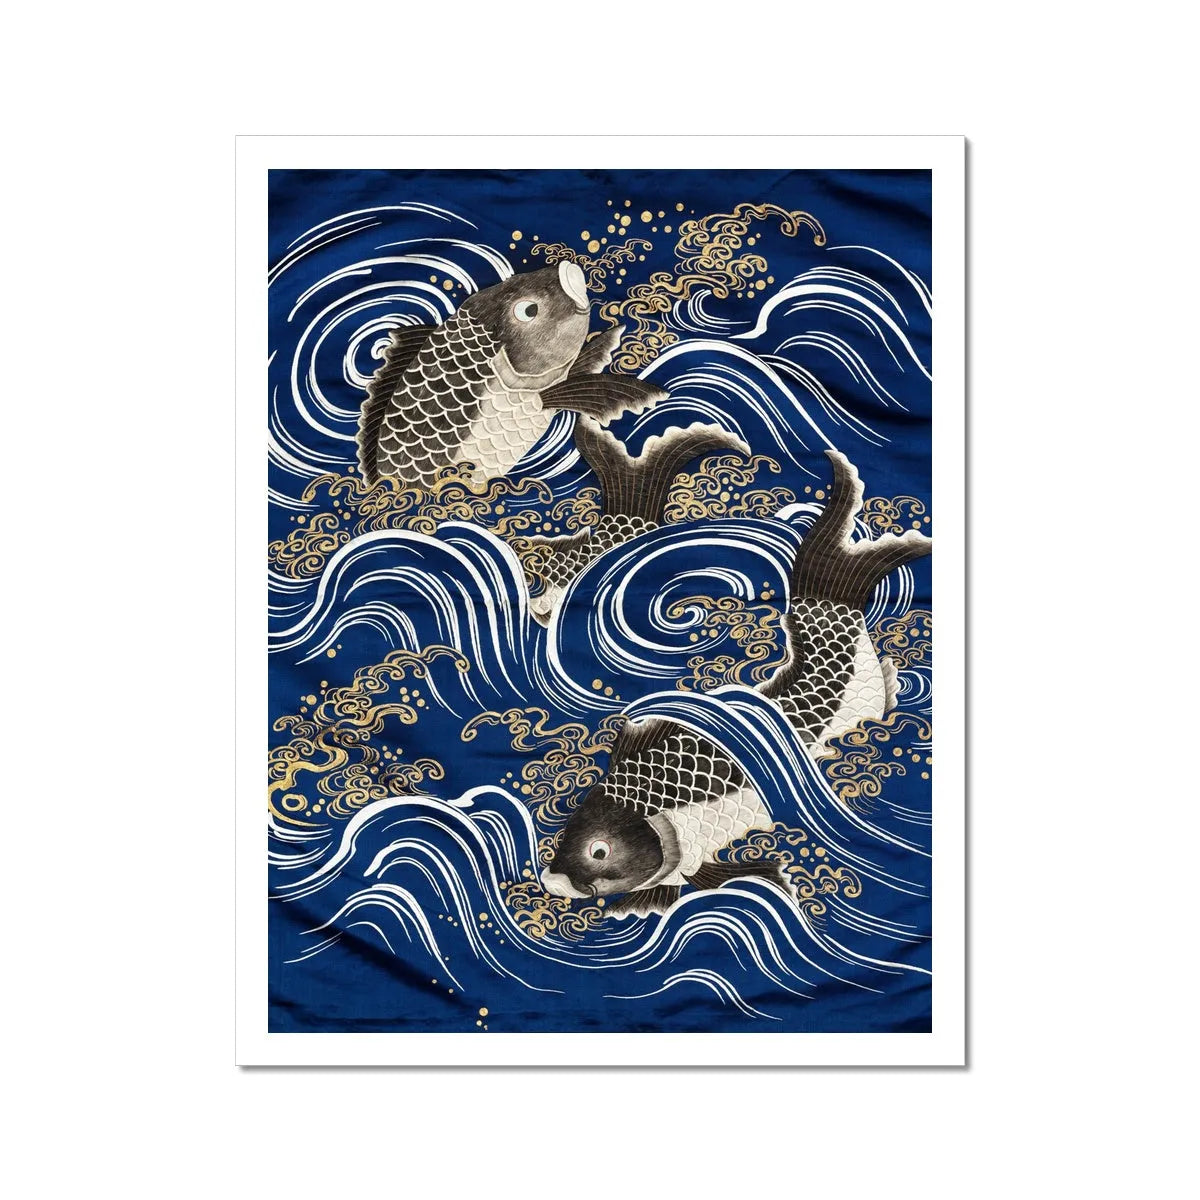 Fukusa + Carp In Waves - Meiji Period Fine Art Print - 11’x14’ - Posters Prints & Visual Artwork - Aesthetic Art